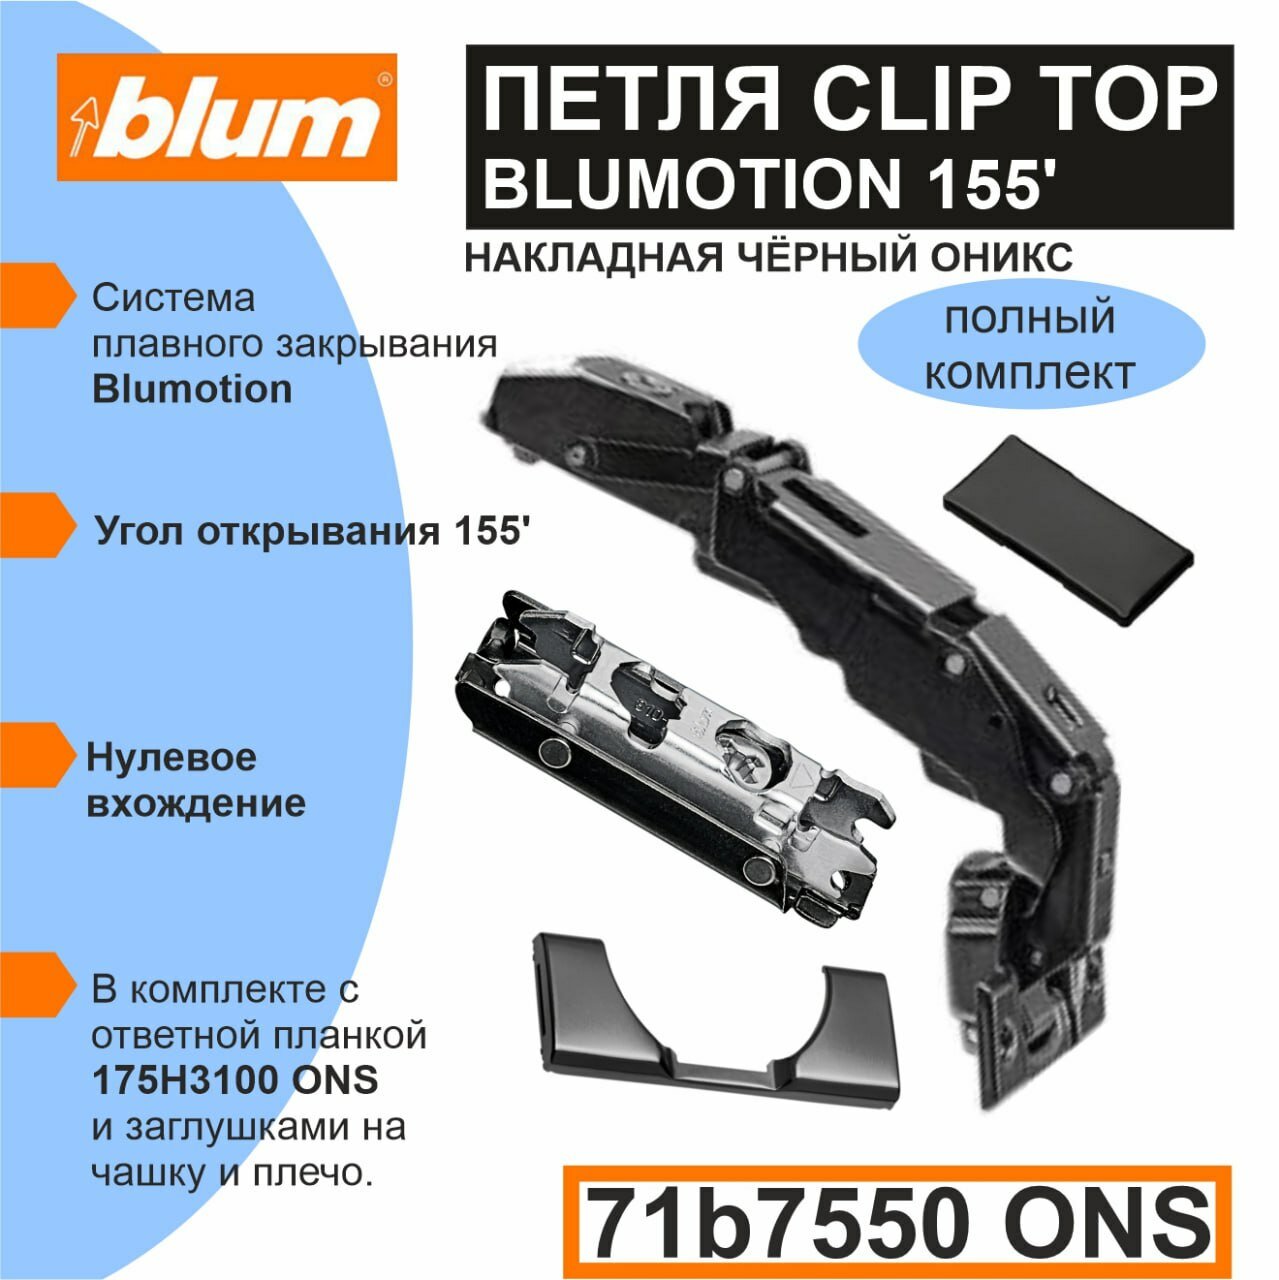 Петля Clip top Blumotion 155 